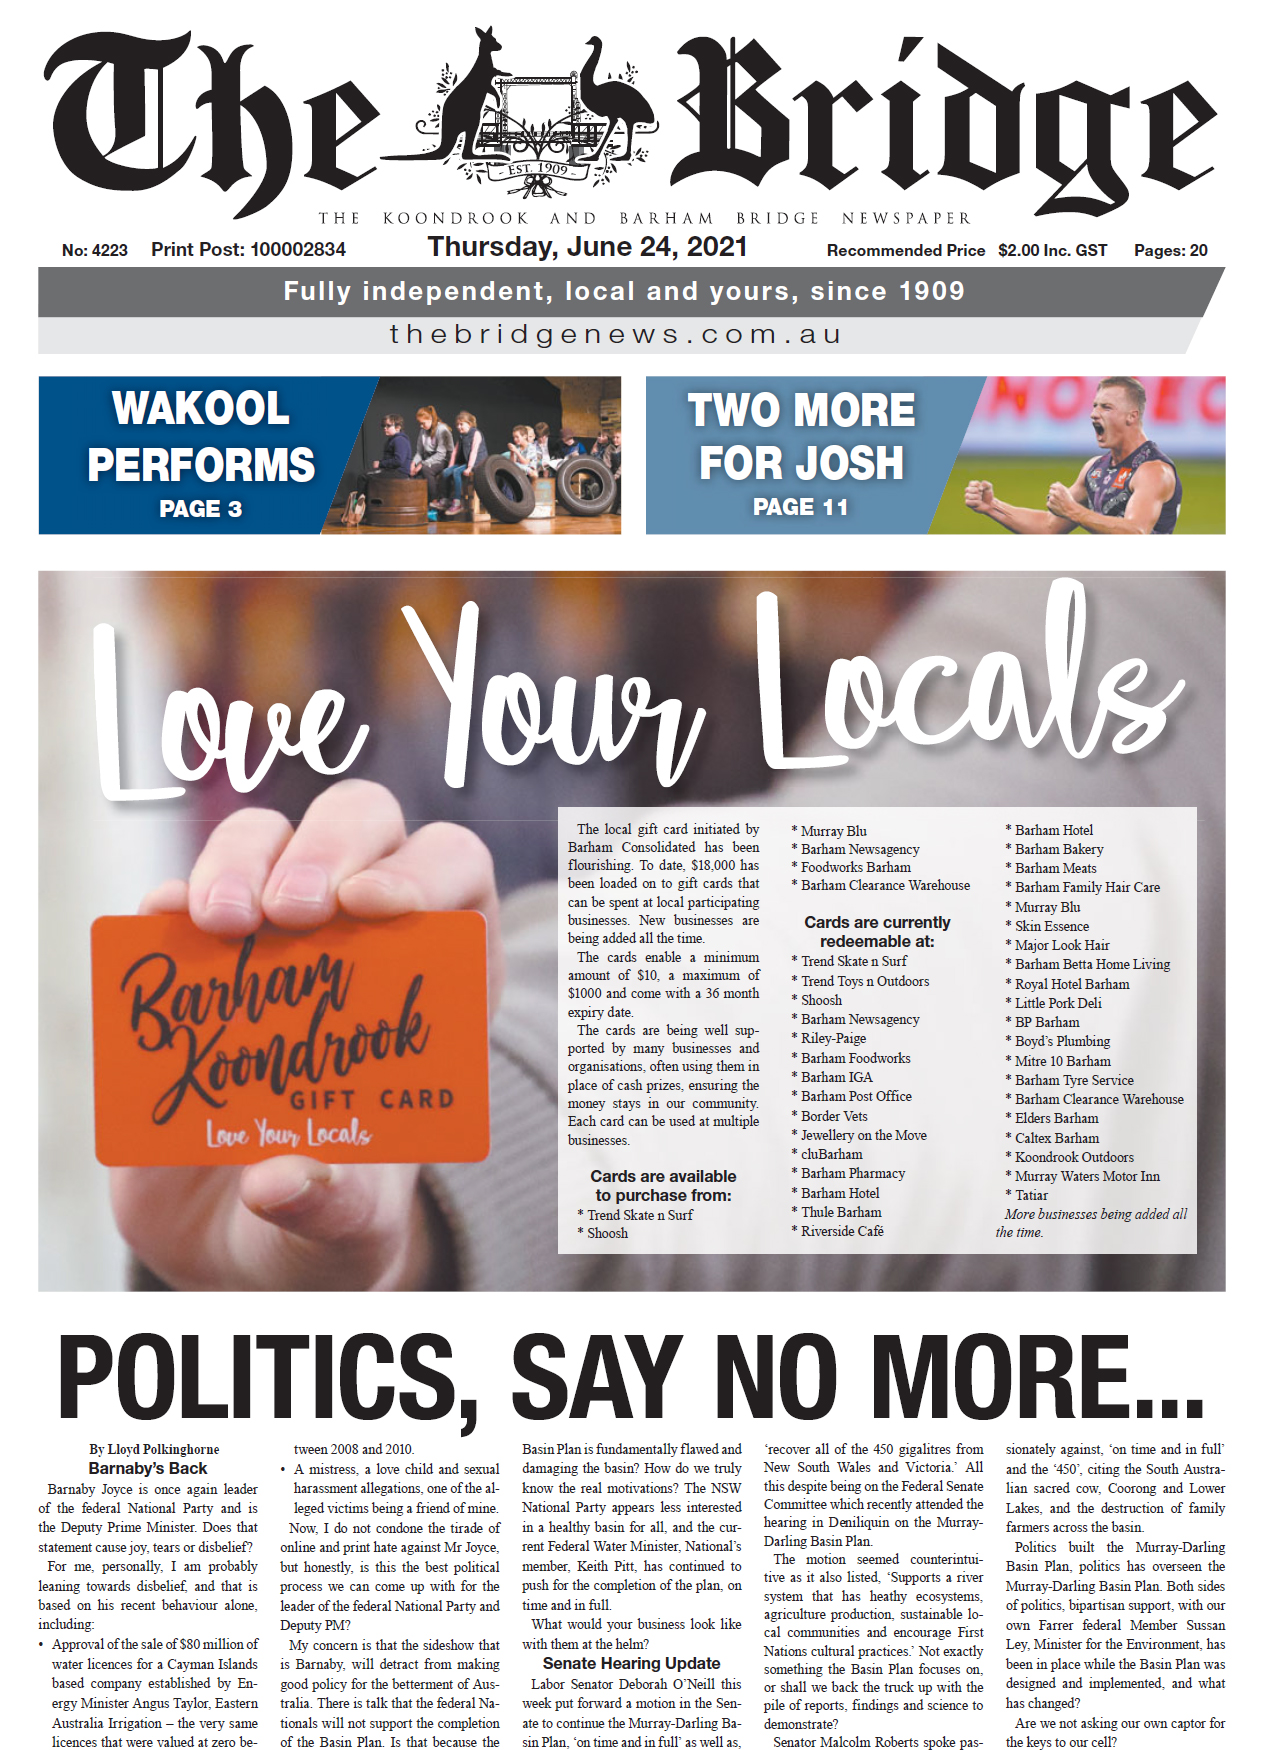 The Koondrook and Barham Bridge Newspaper 24 June 2021